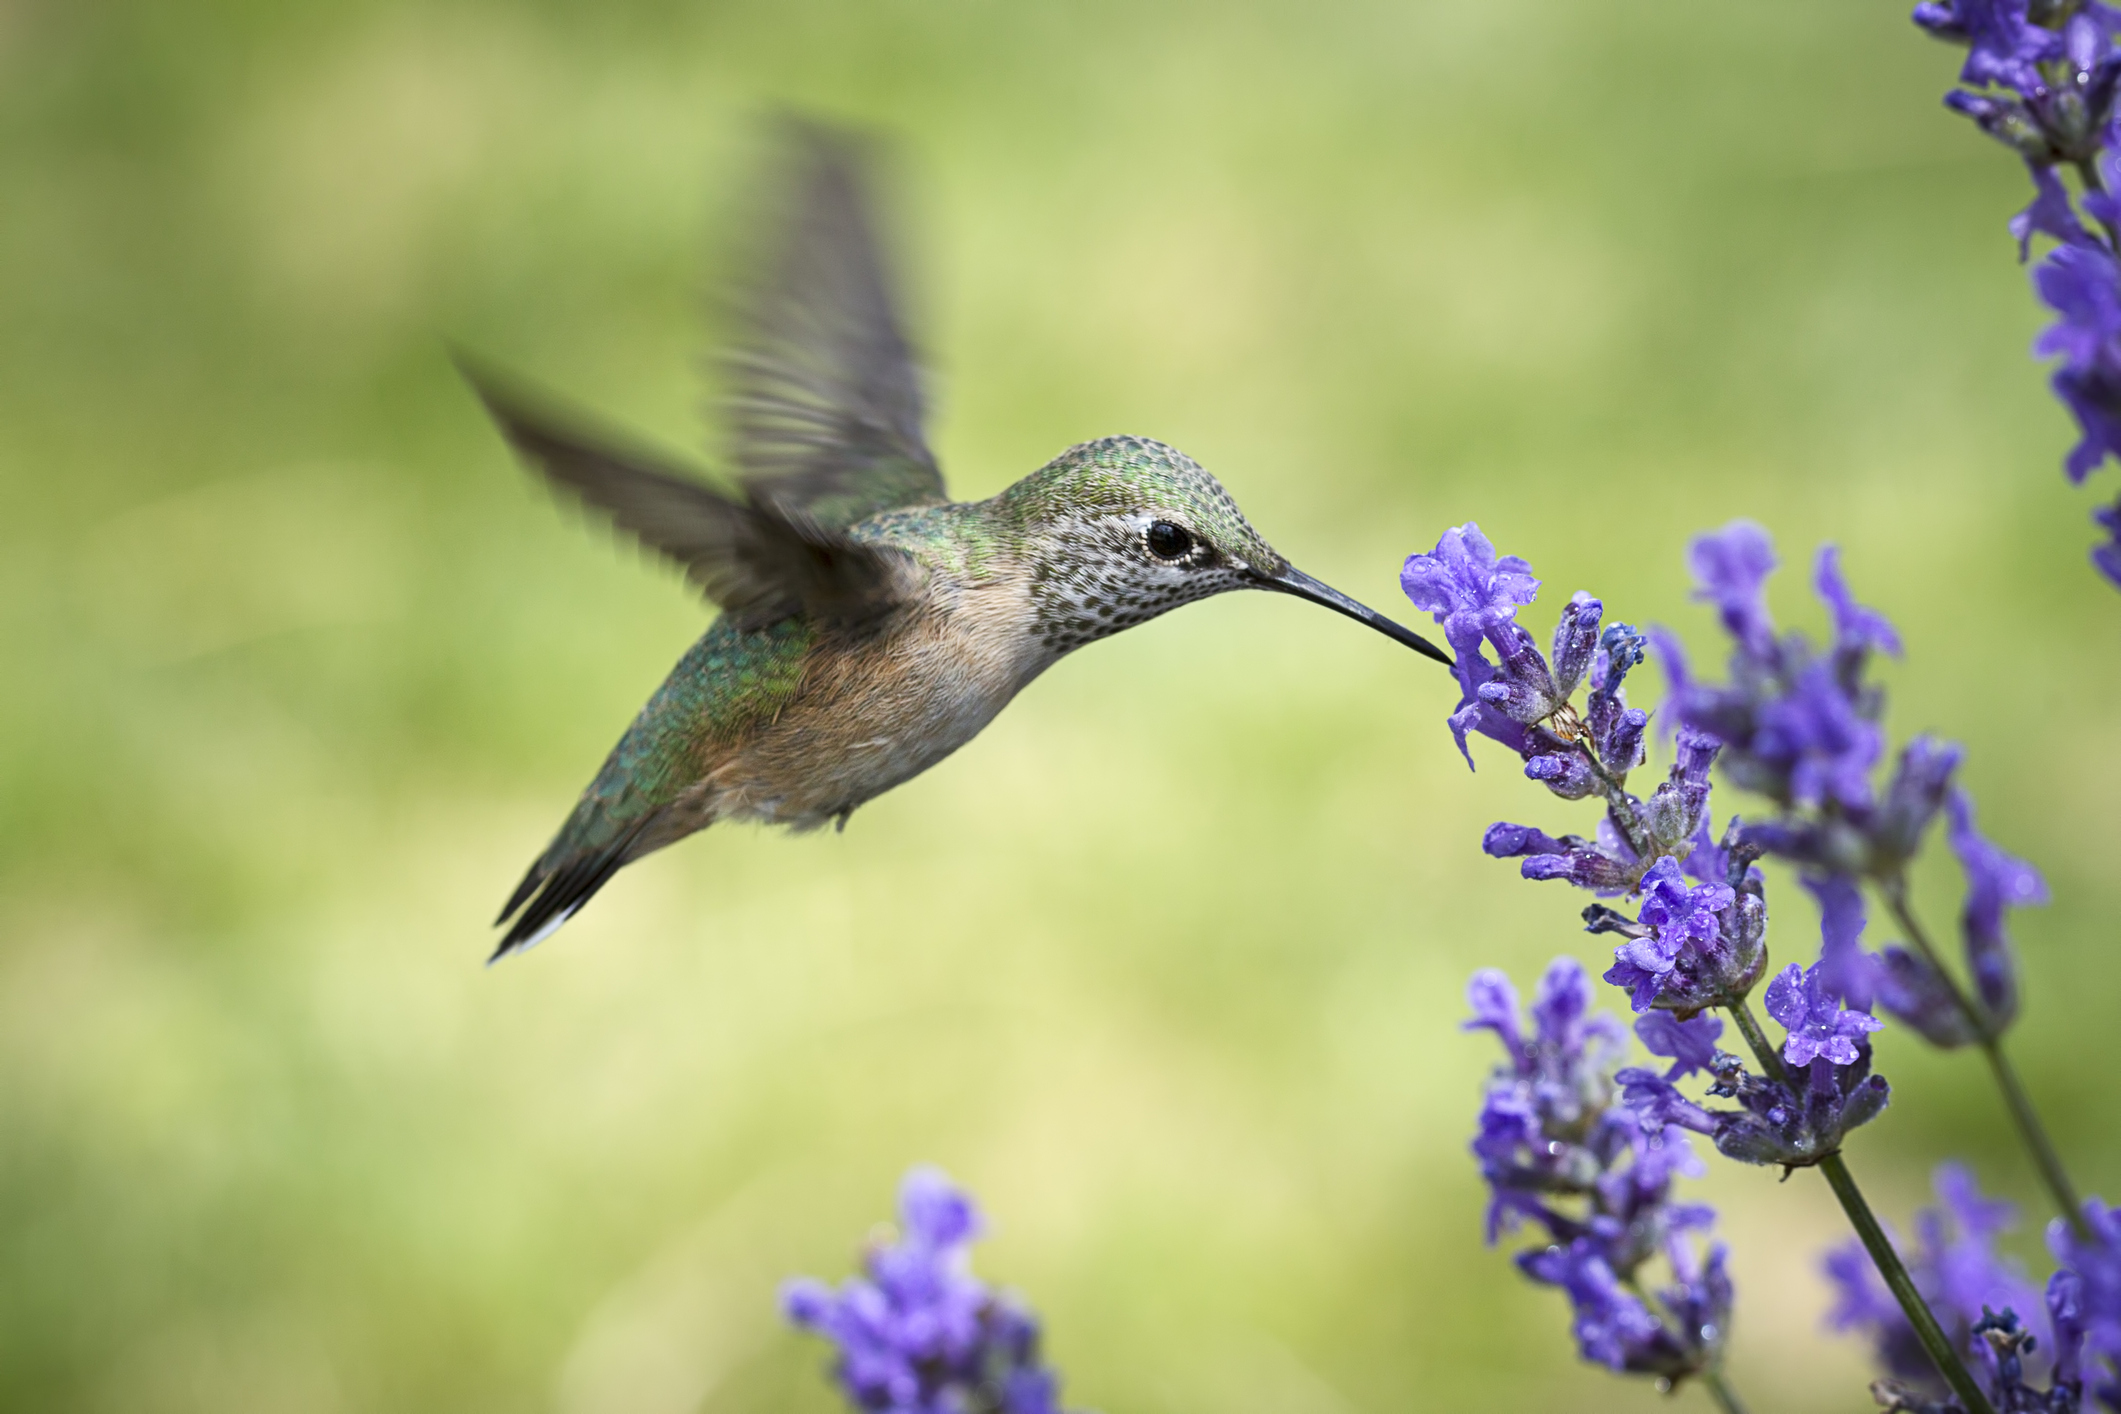 Rufous hummingbird drinking from a purple flower